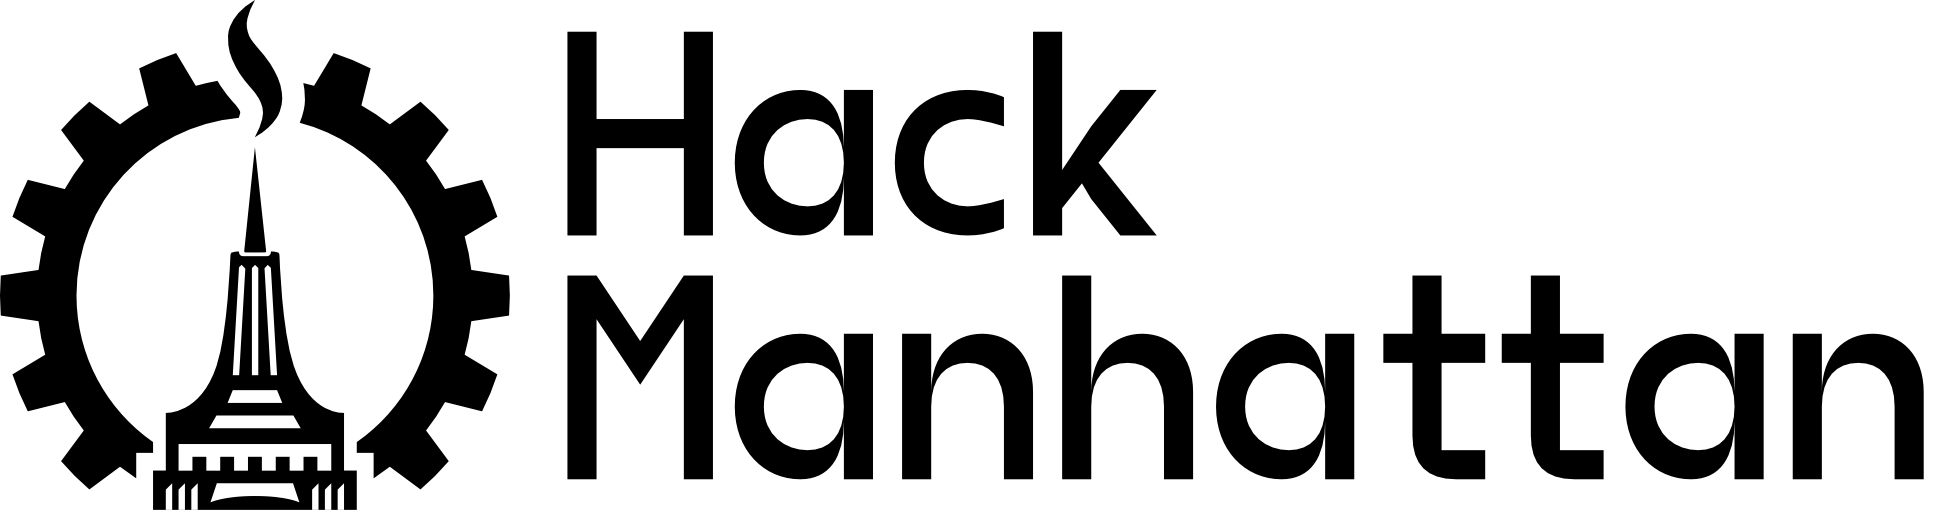 Hack Manhattan logo with text